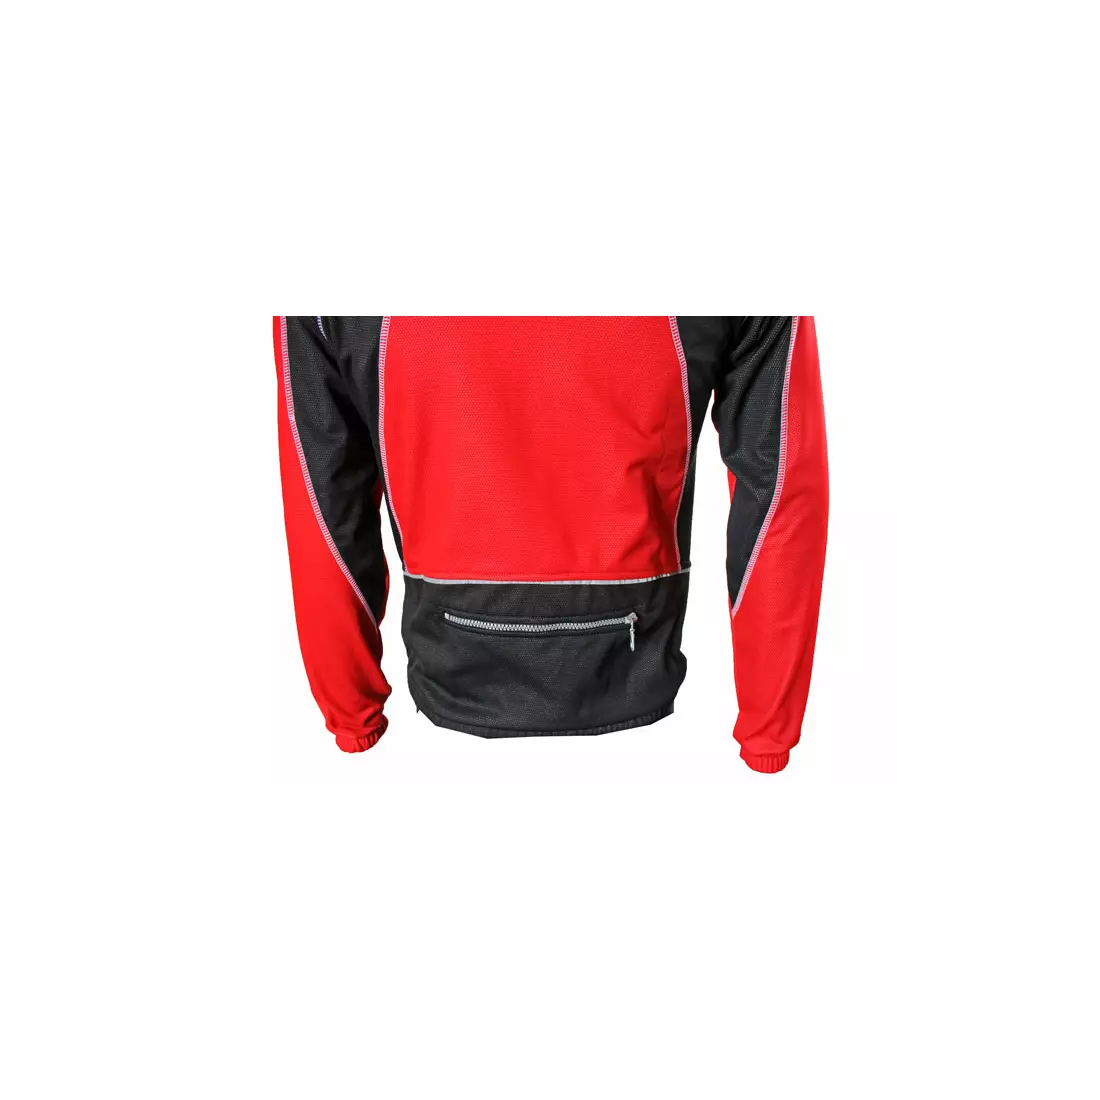 POLEDNIK - 1003 WINDBLOCK - membrane cycling jacket, color: Red